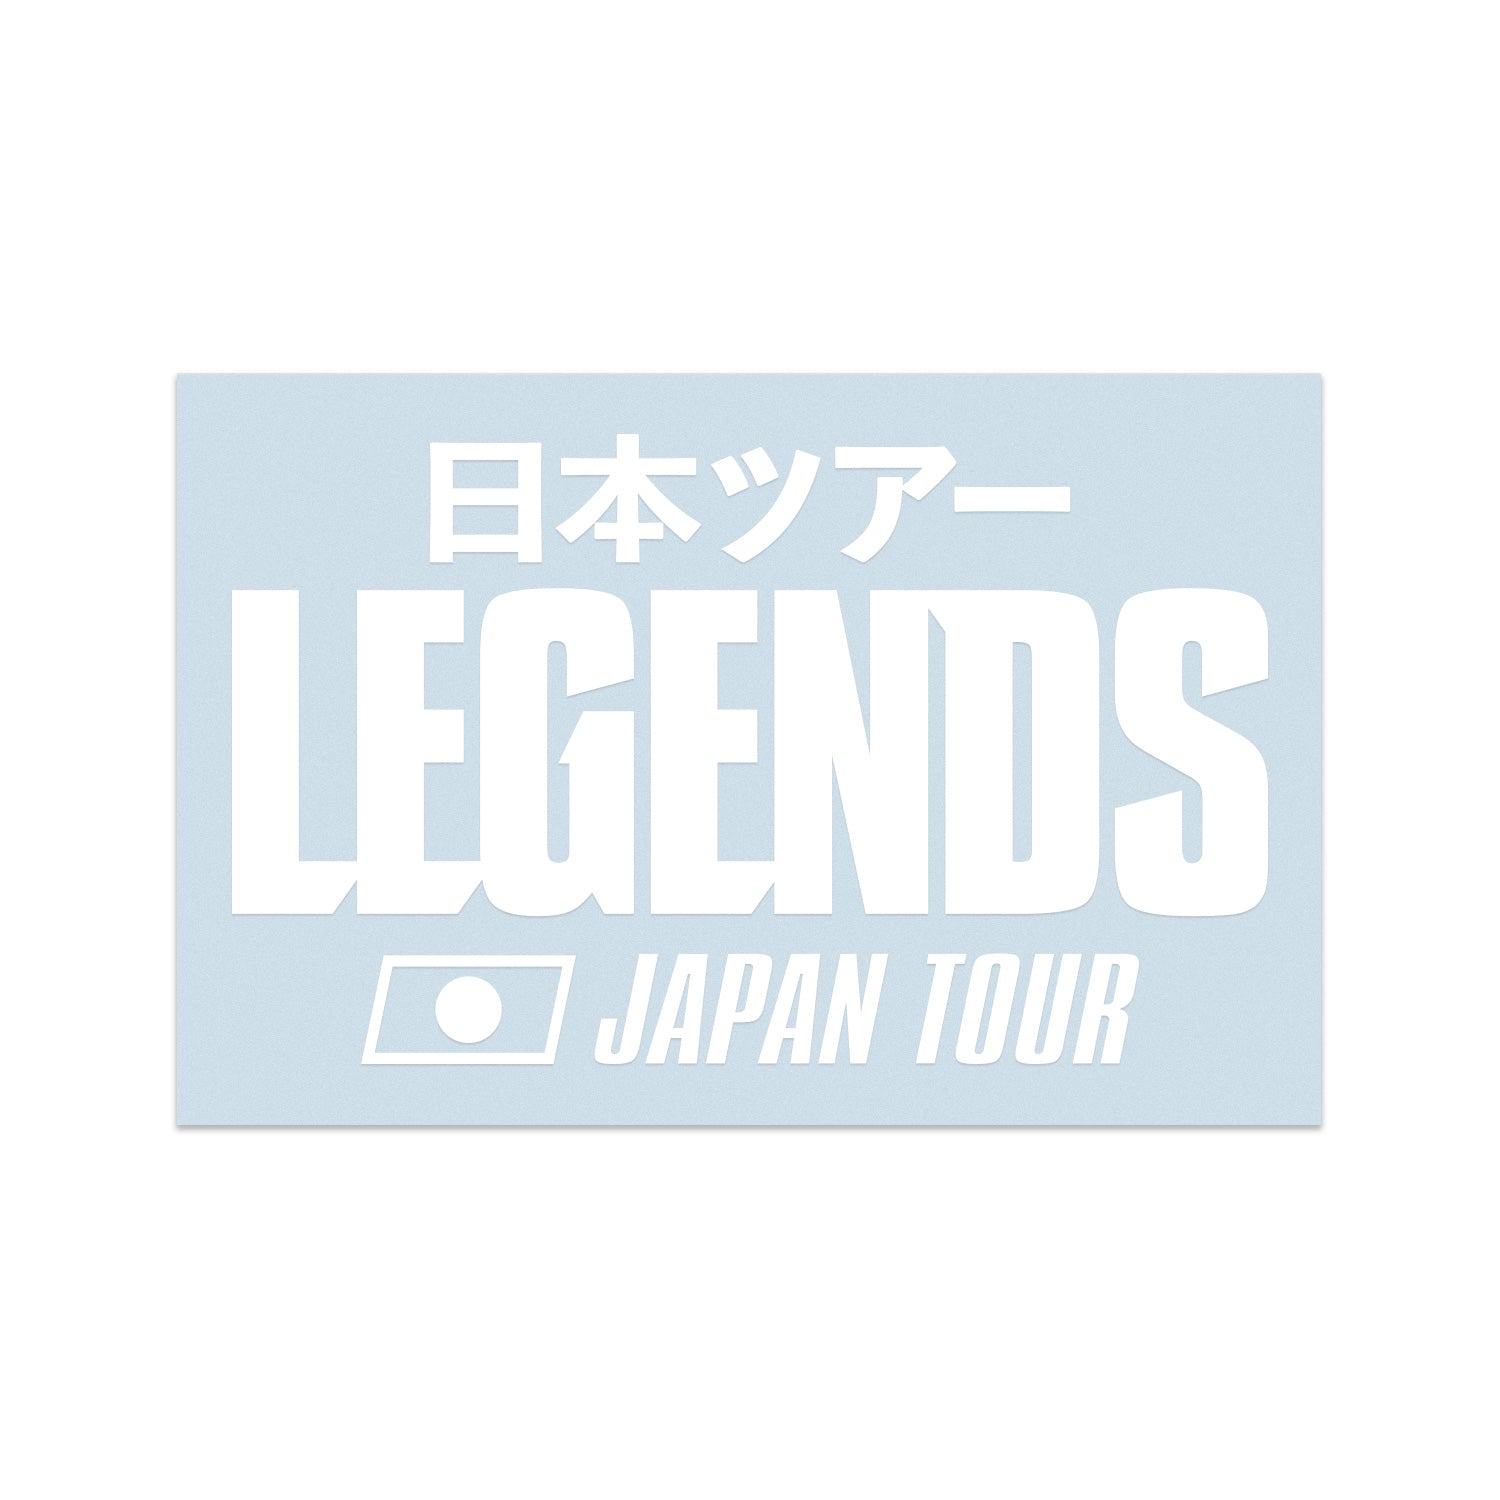 Die Cut Sticker - White Japan Tour